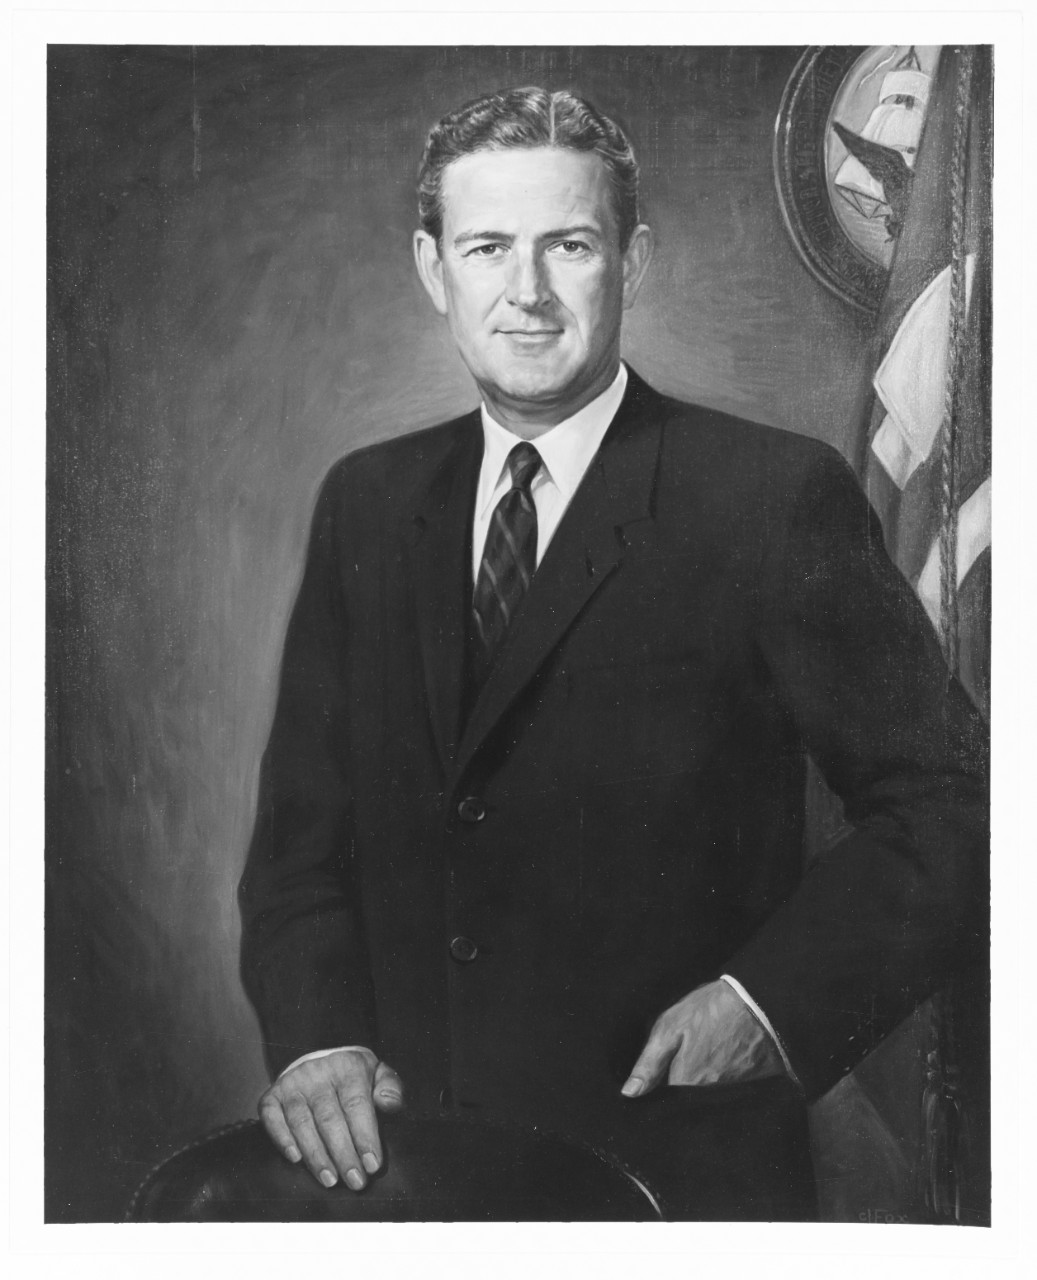 Portrait of John B. Connally, Jr.